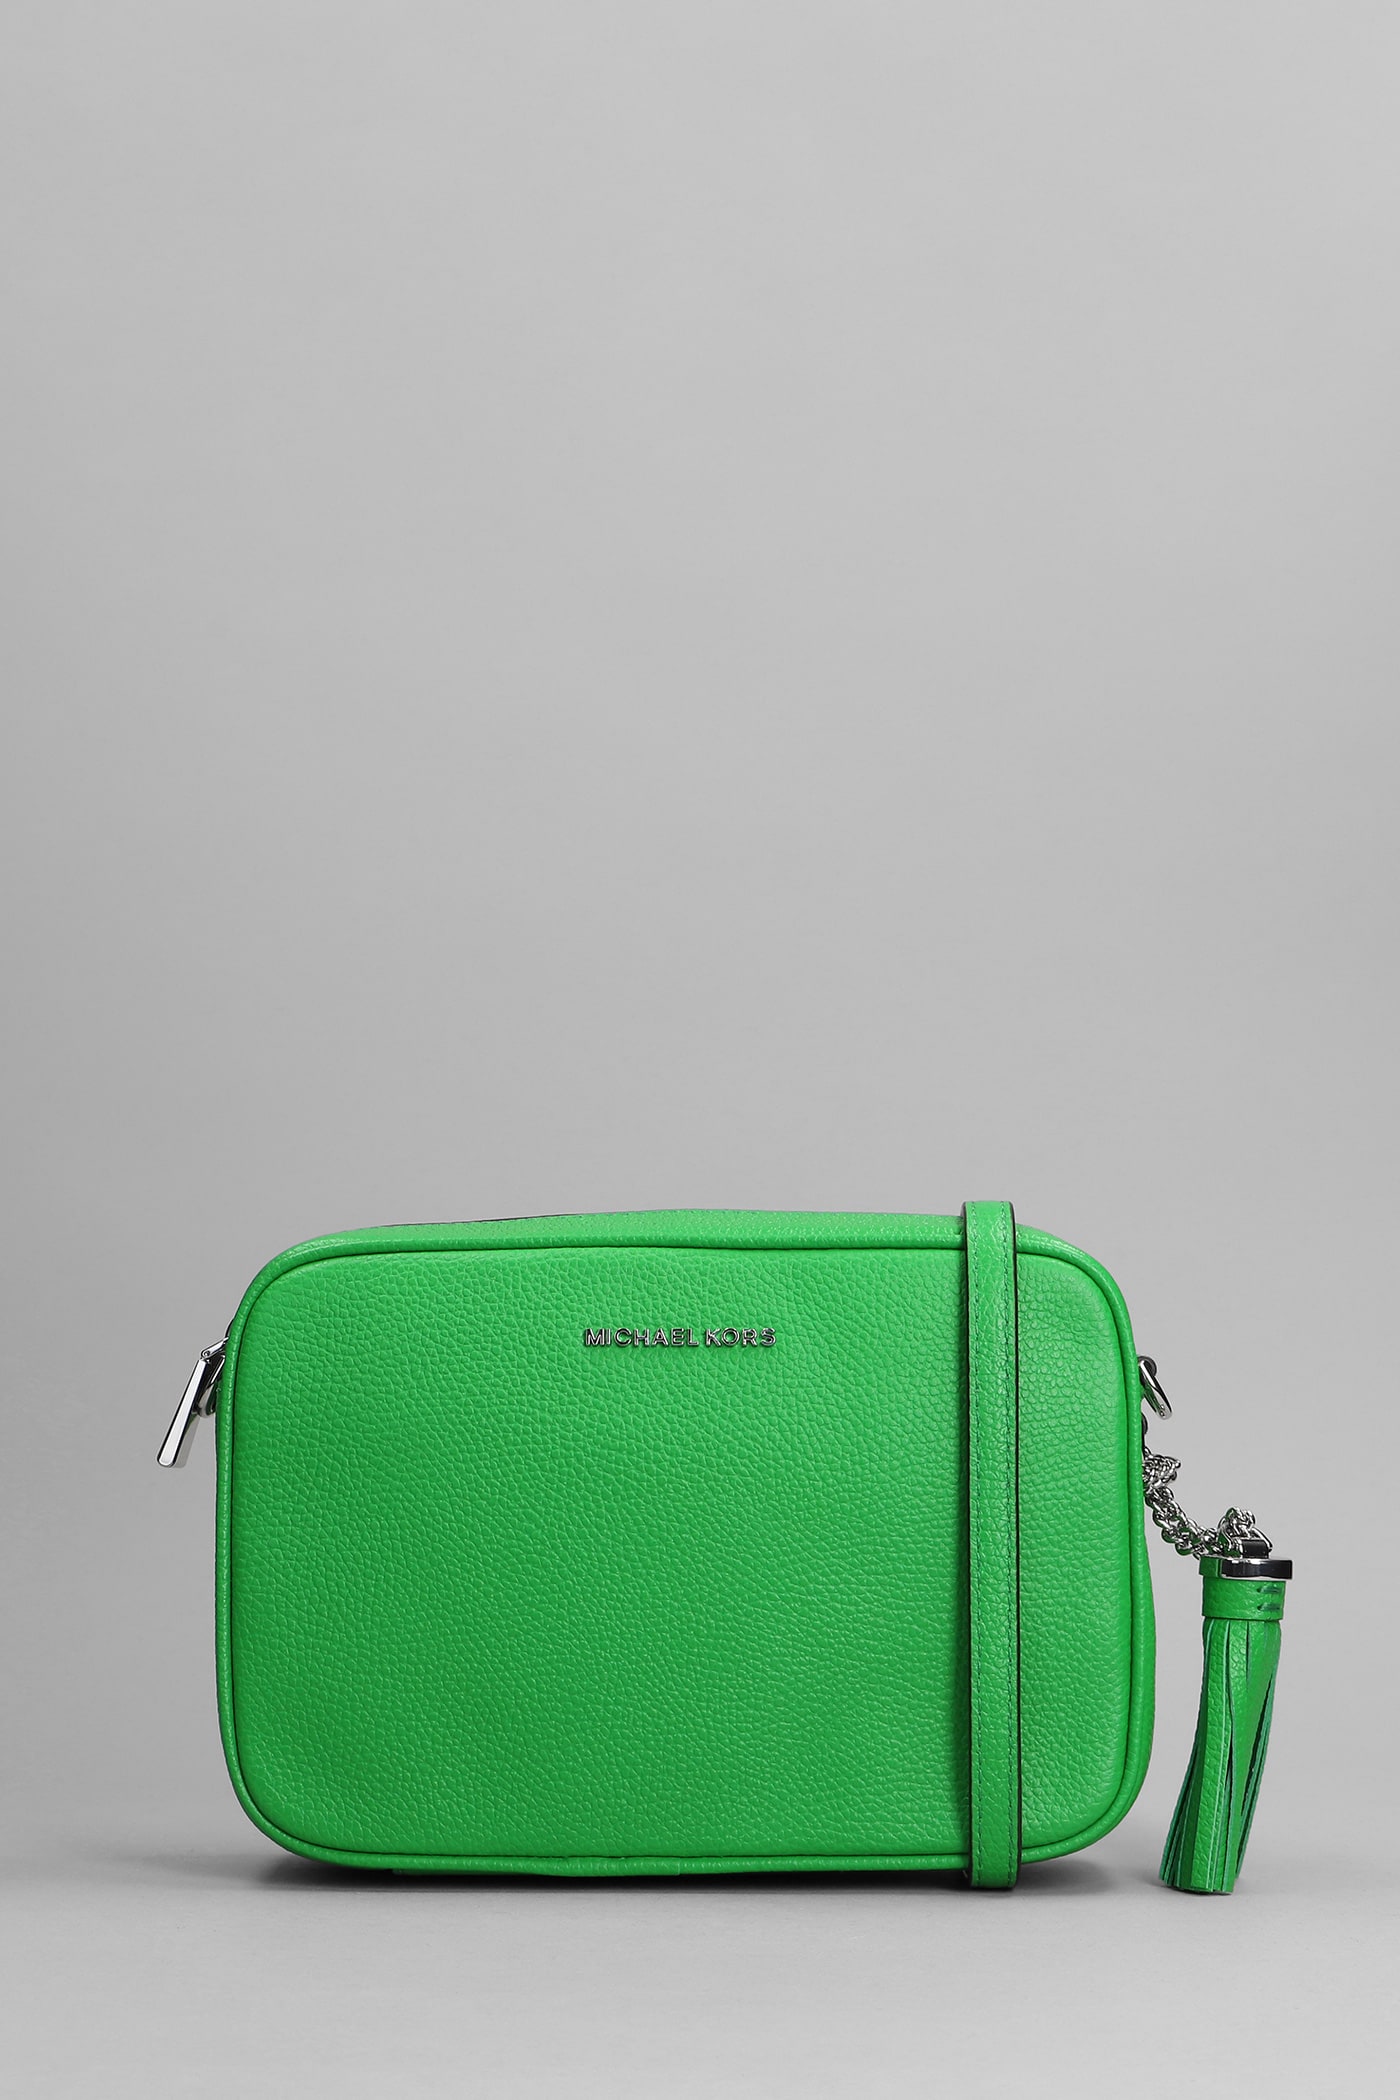 Michael Kors Ginny Shoulder Bag In Green Leather